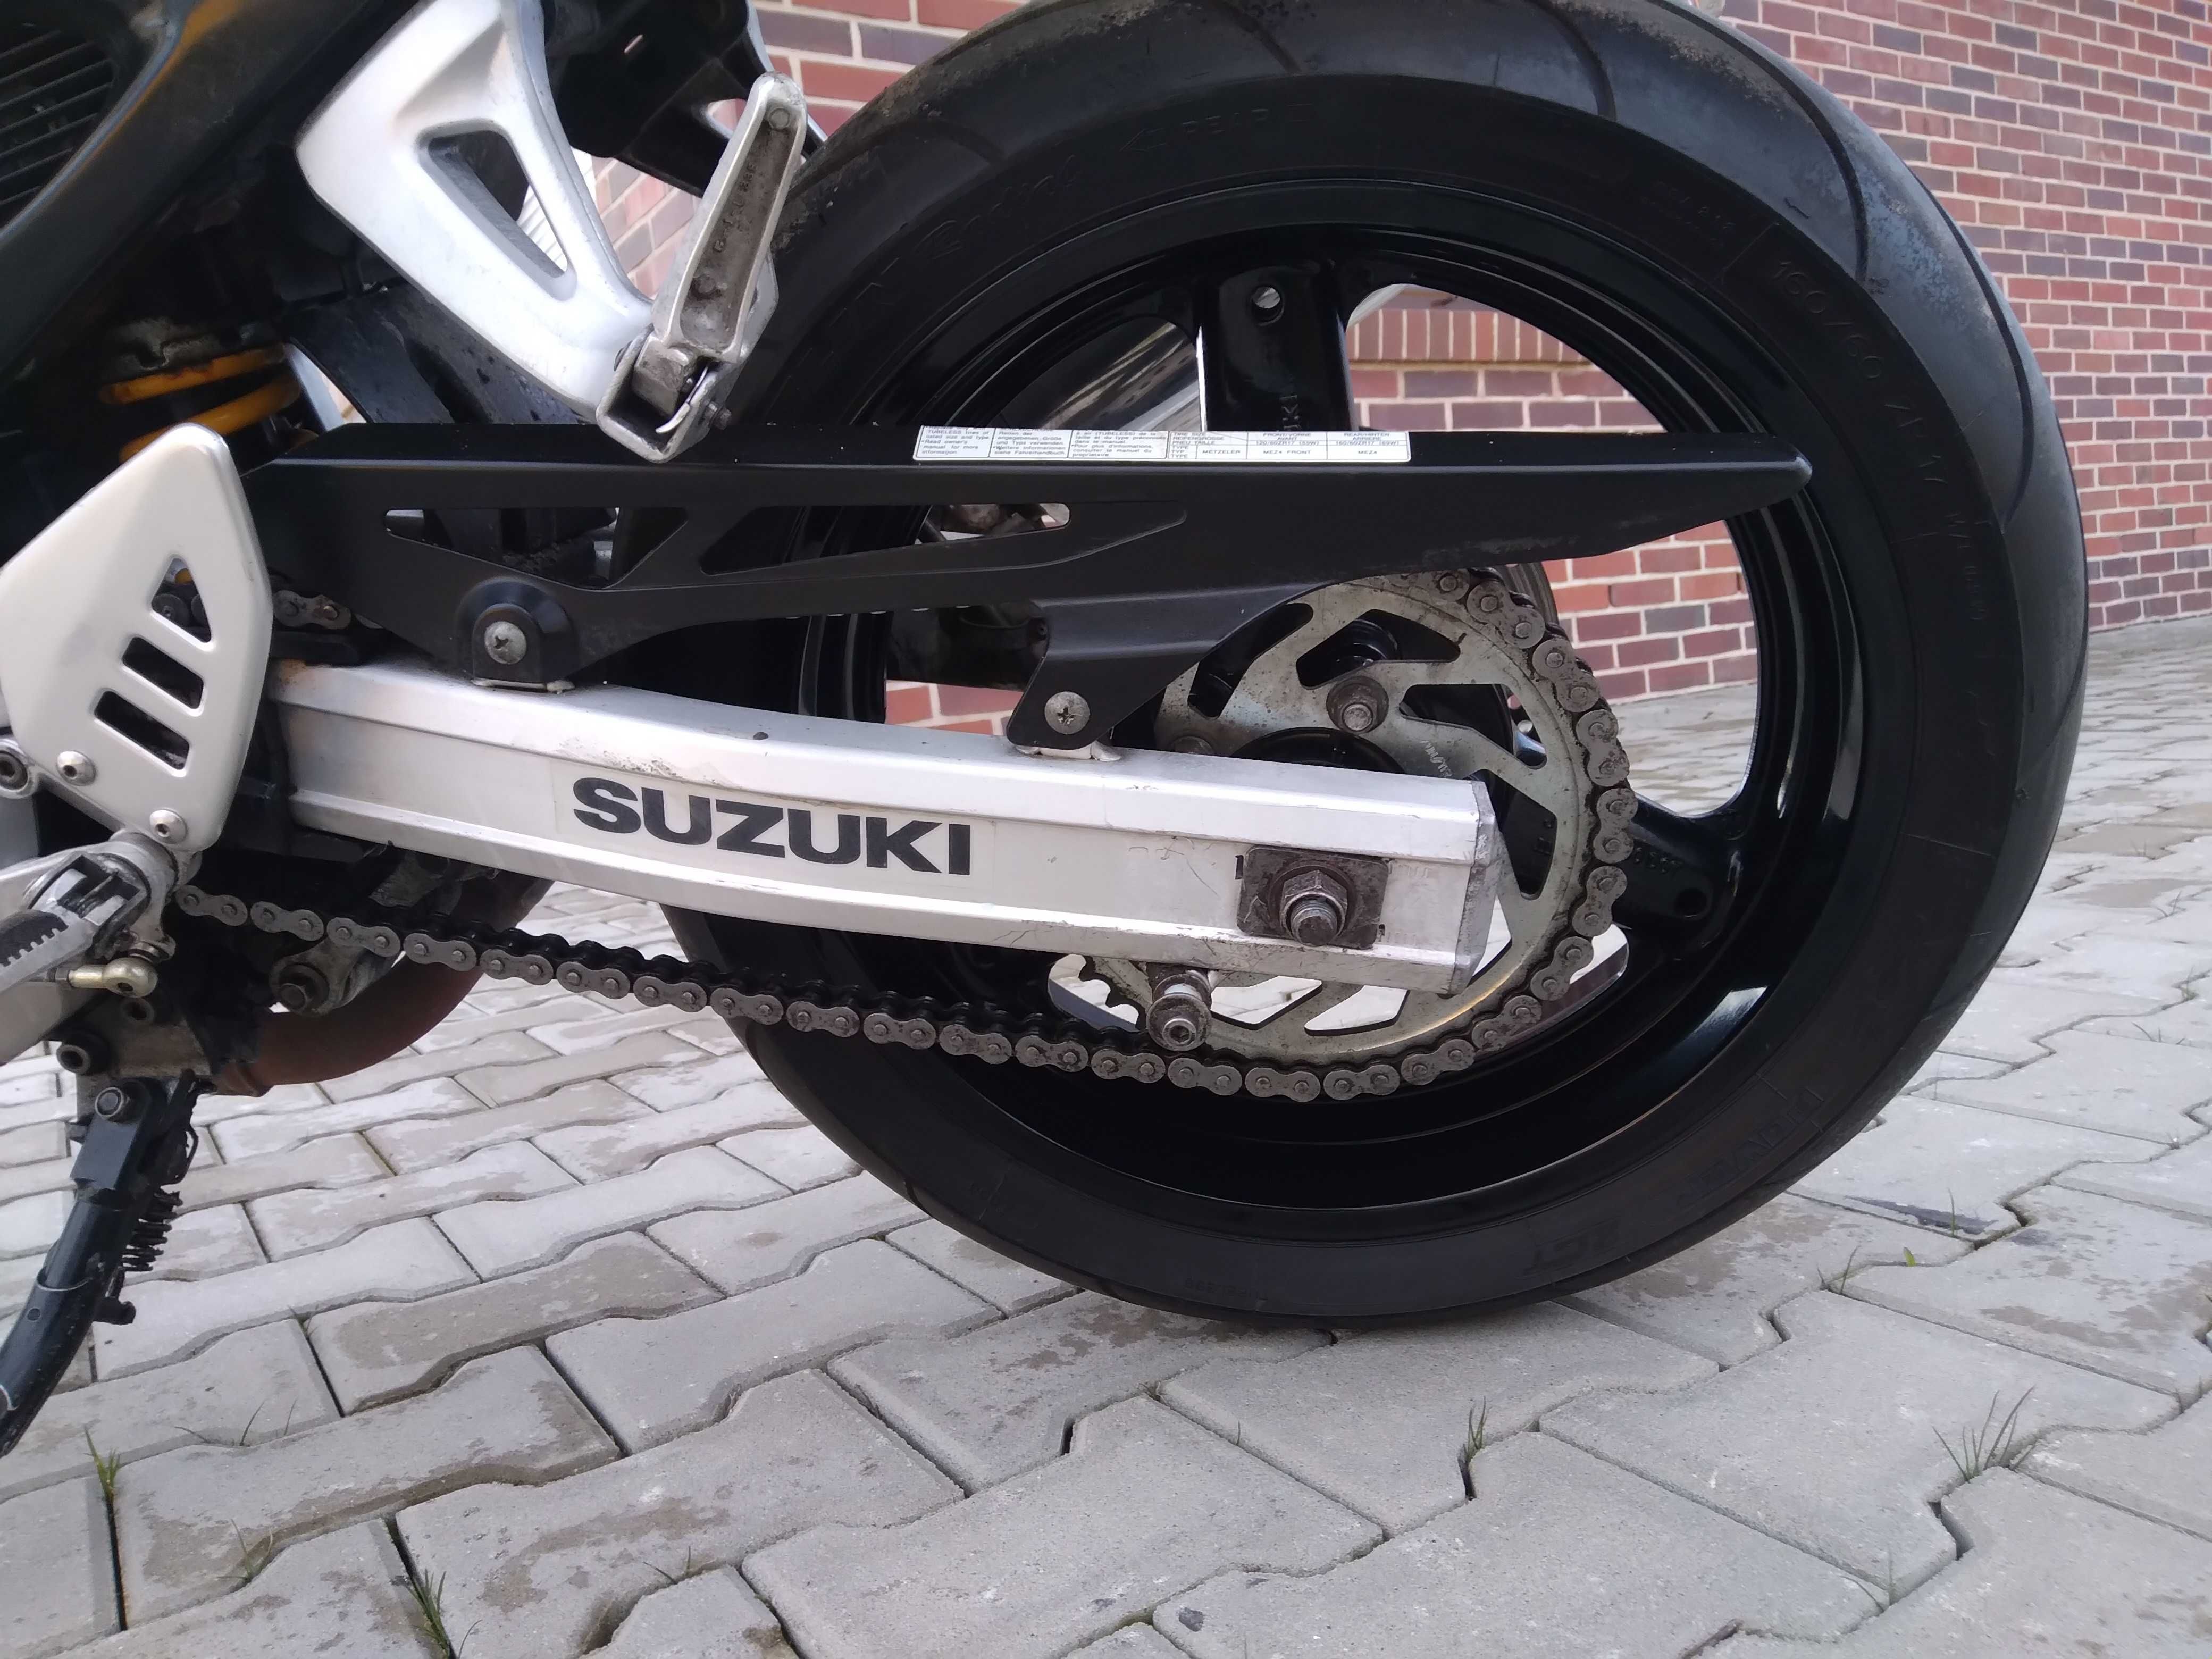 Suzuki SV 650. Suzuki